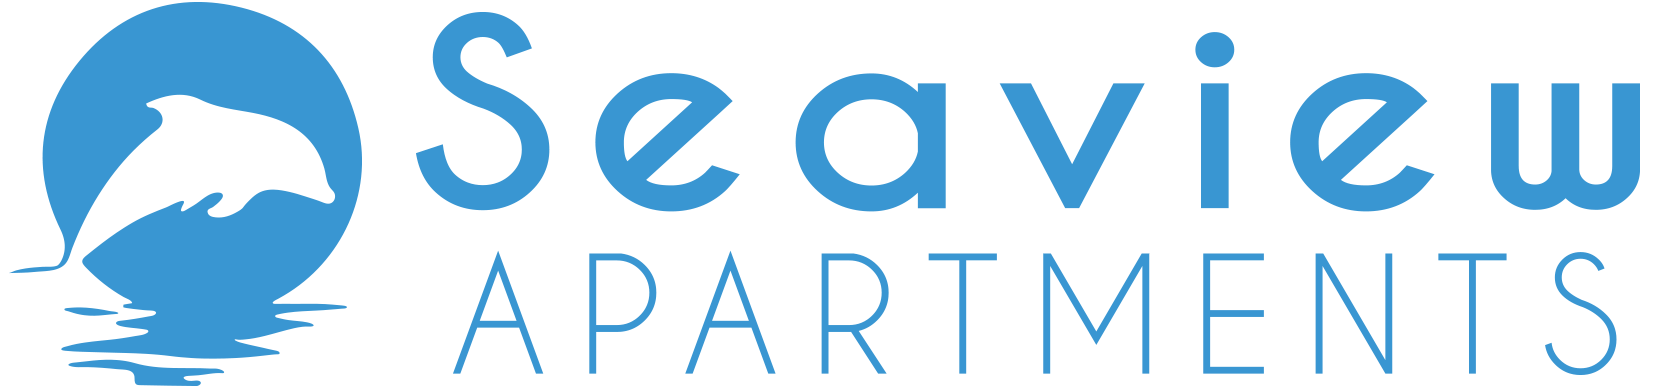 Seaview logo